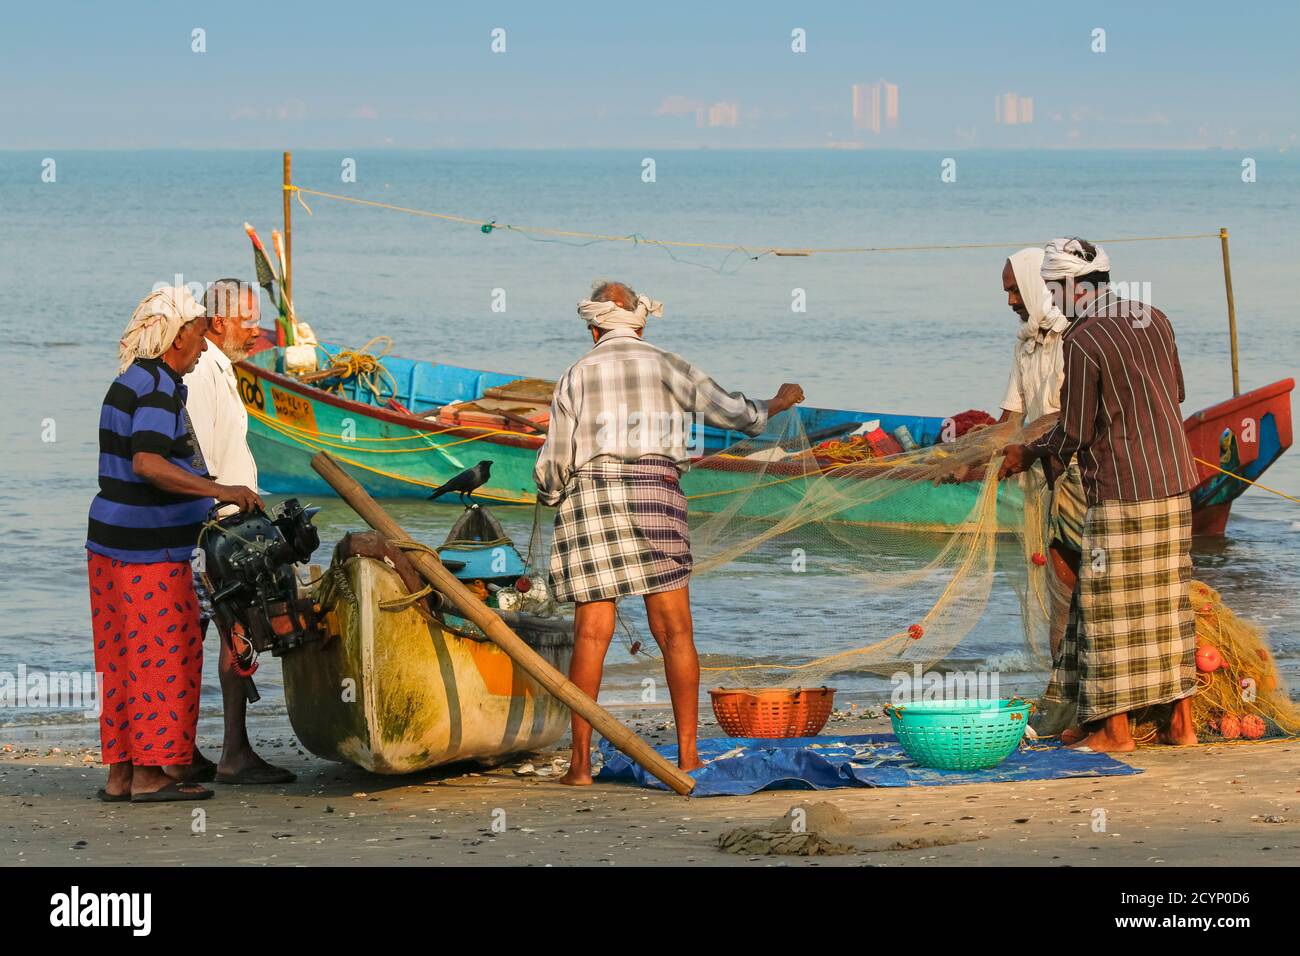 life of traditional fishing people in Kerala, wooden fisherman boat,  fisherman throwing the net in the seashore, fisherman repairs fishing net  Stock Photo - Alamy